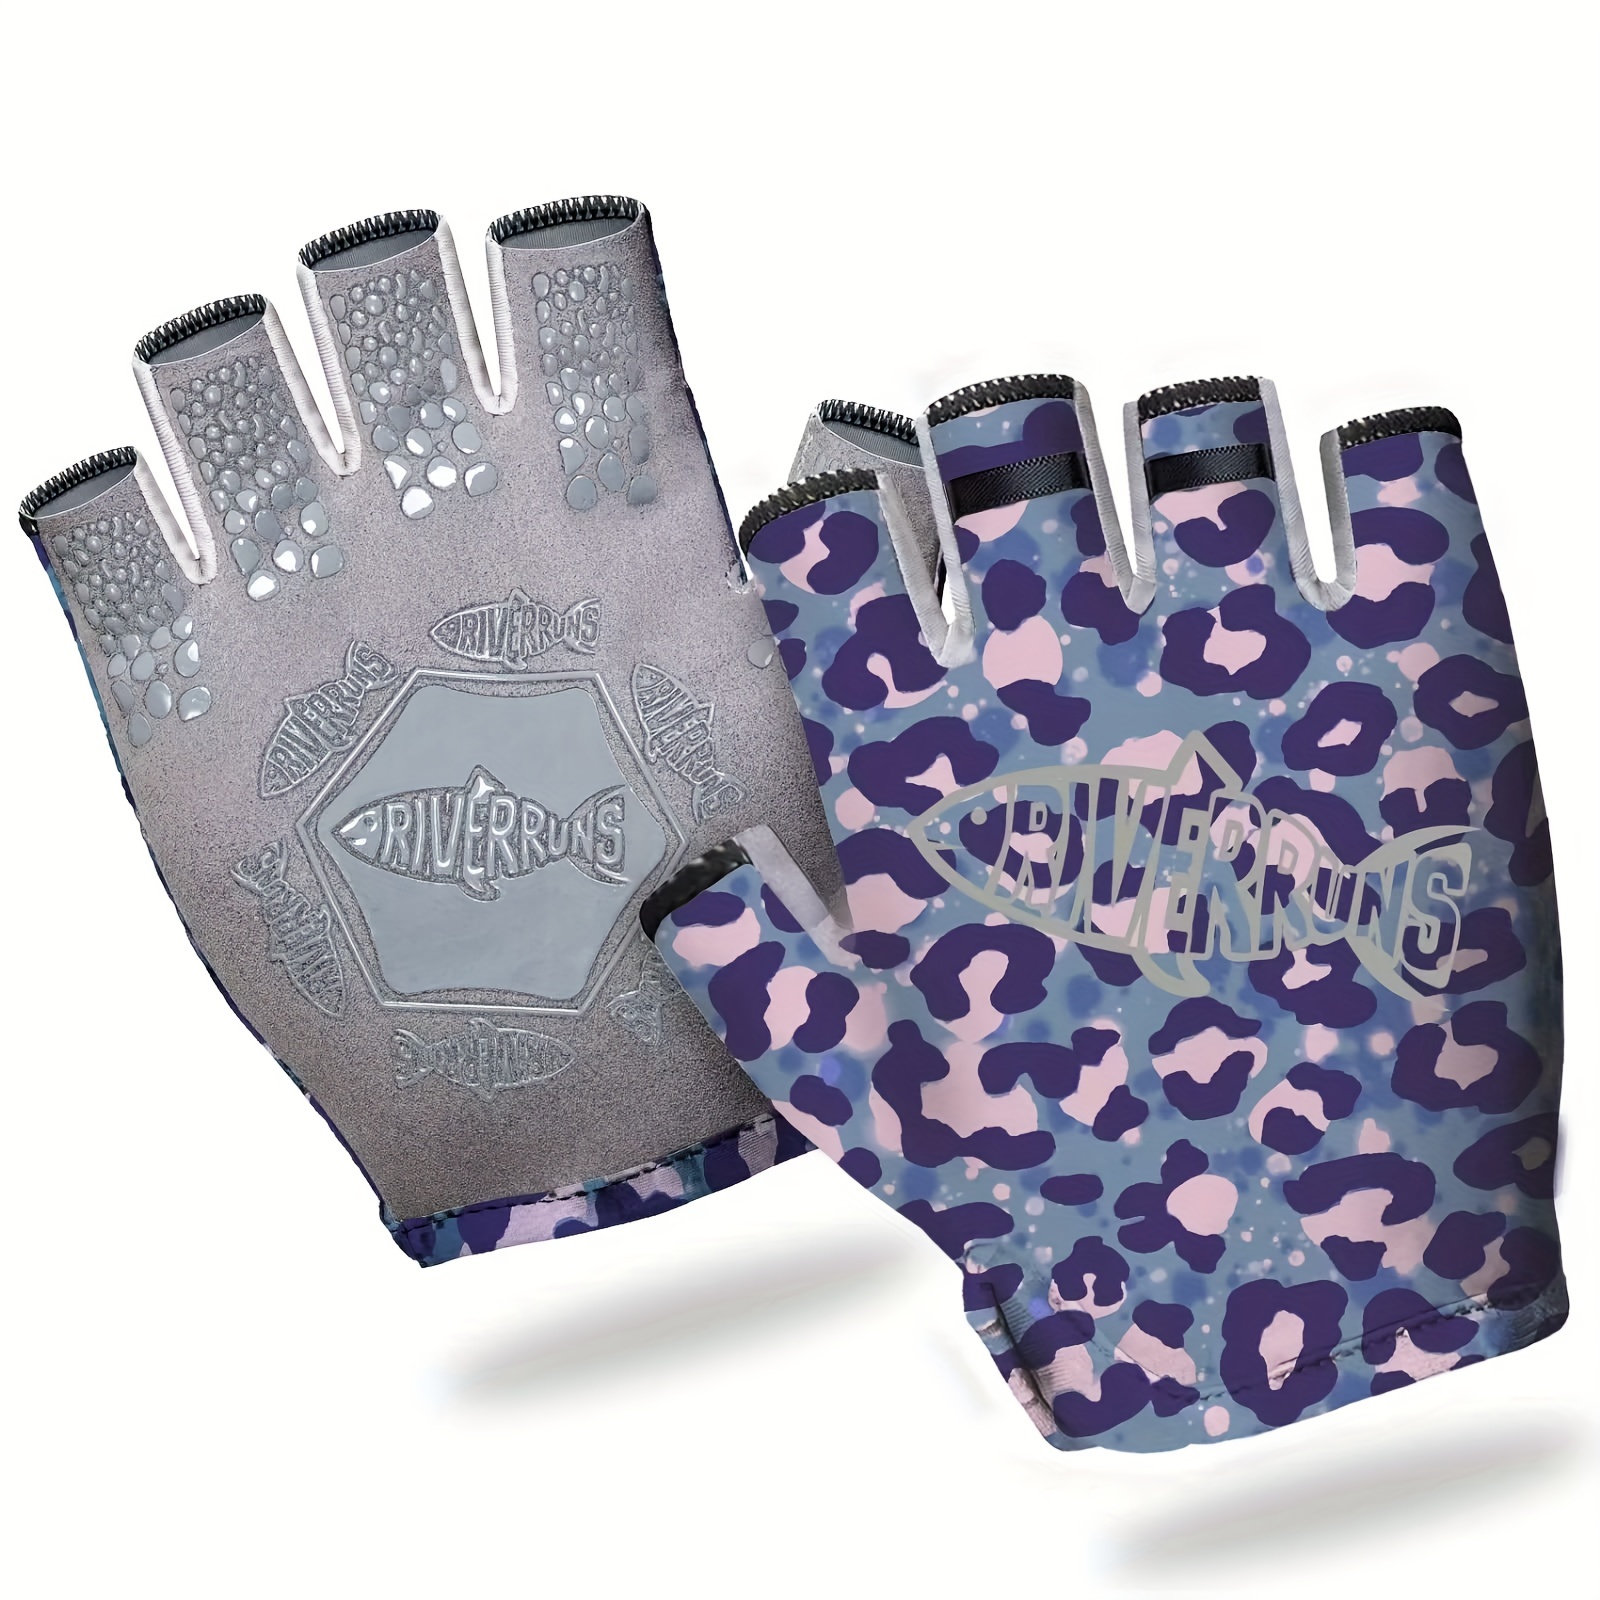 Upf 50+ Fingerless Fishing Gloves - Fishing Sun Protection Gloves - Uv  Protection Gloves For Men And Women Fishing, Rowing, Hiking, Running,  Cycling And Driving